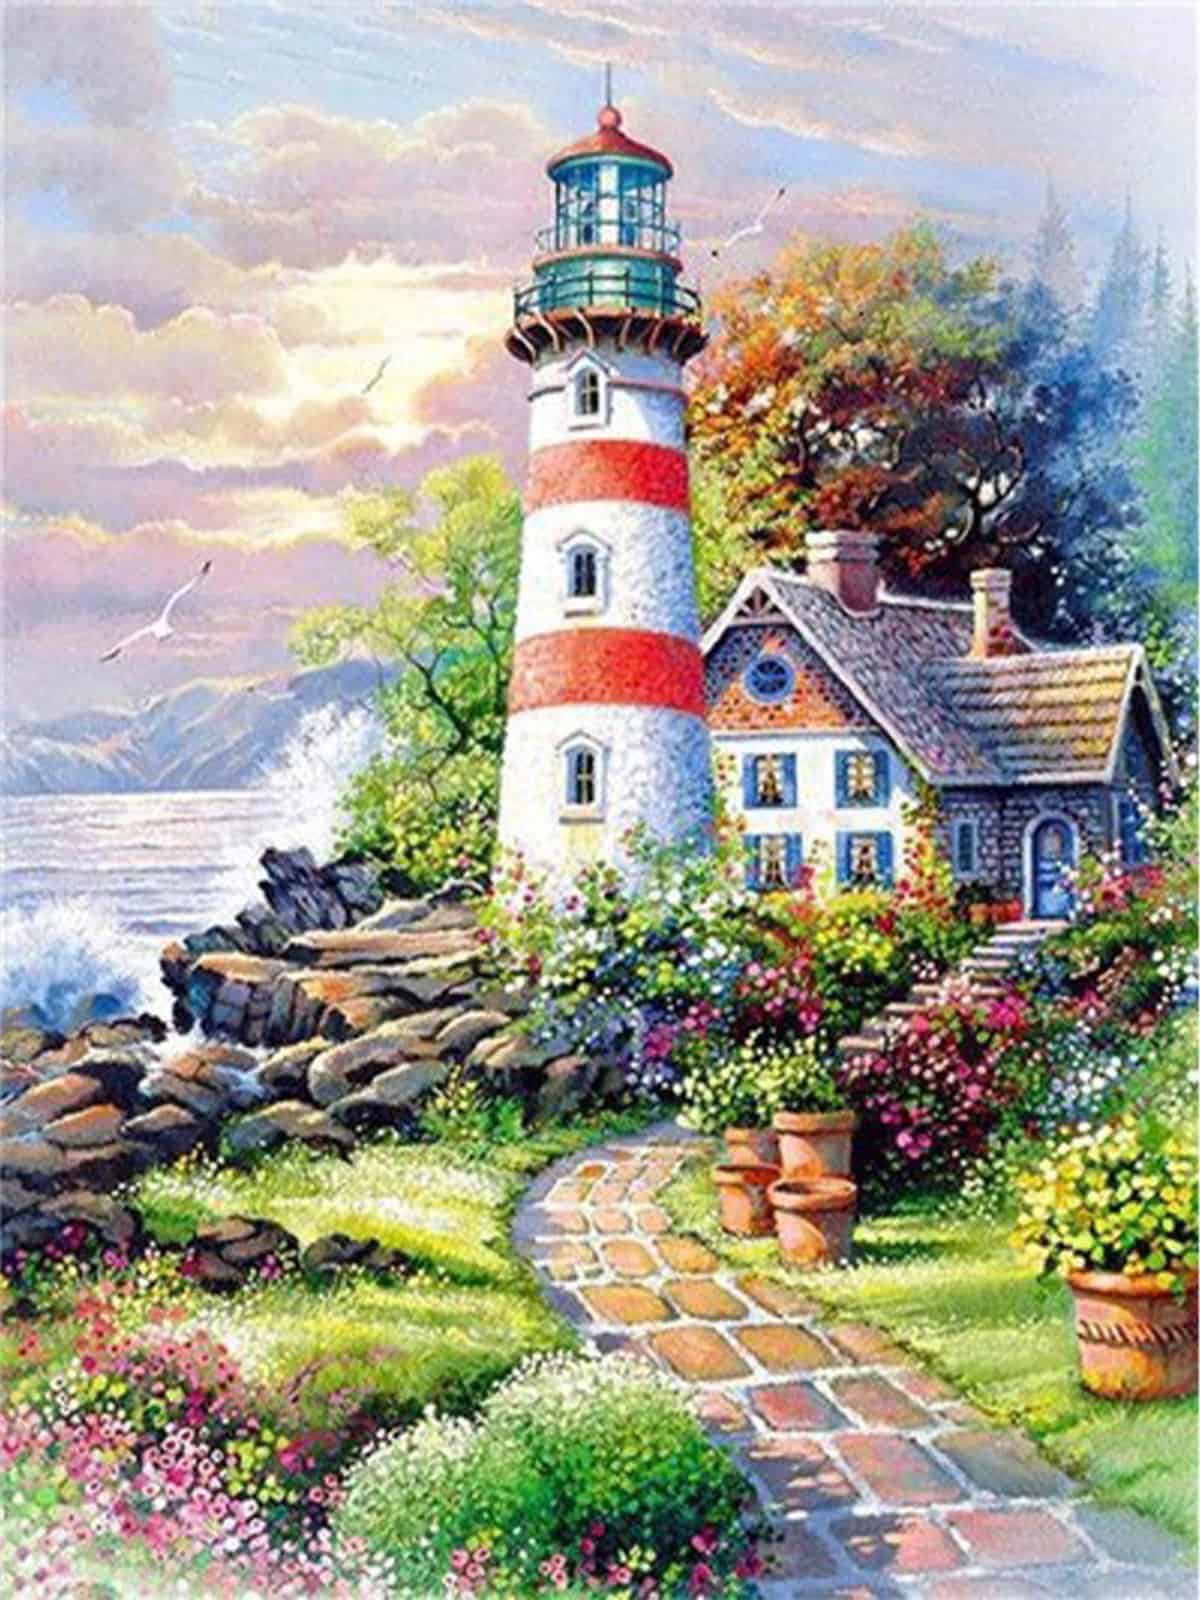 diamonds-wizard-diamond-painting-kits-Landscape-Lighthouse-Lighthouse-and-Cozy-Home-original.jpg